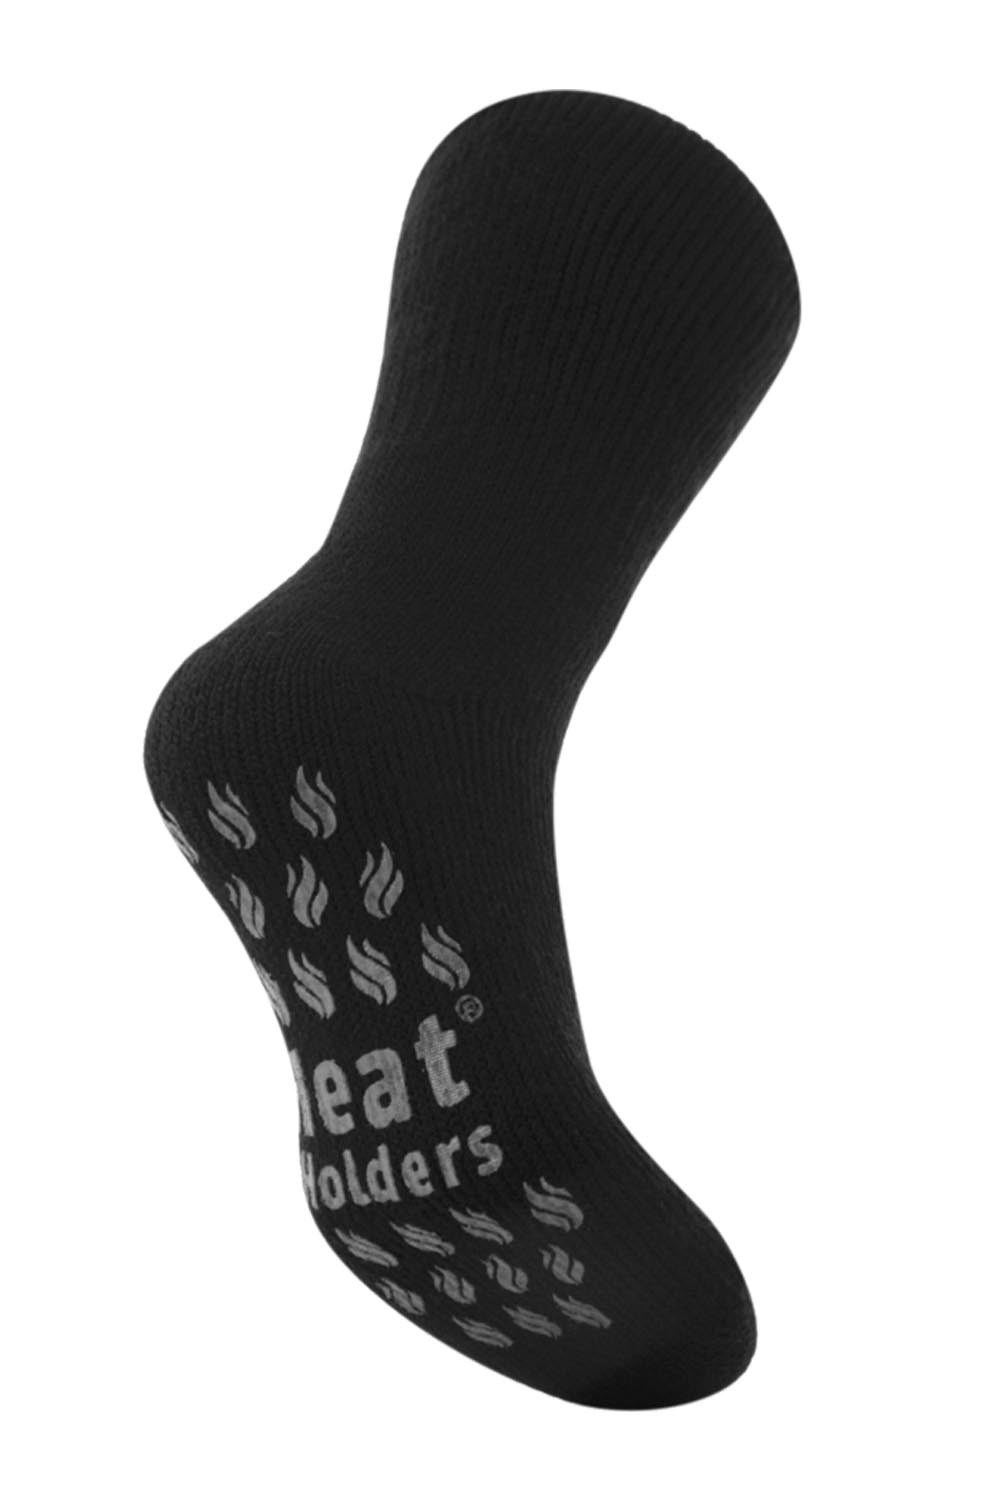  Heat Holders Men's Thermal Gripper Slipper Socks Size